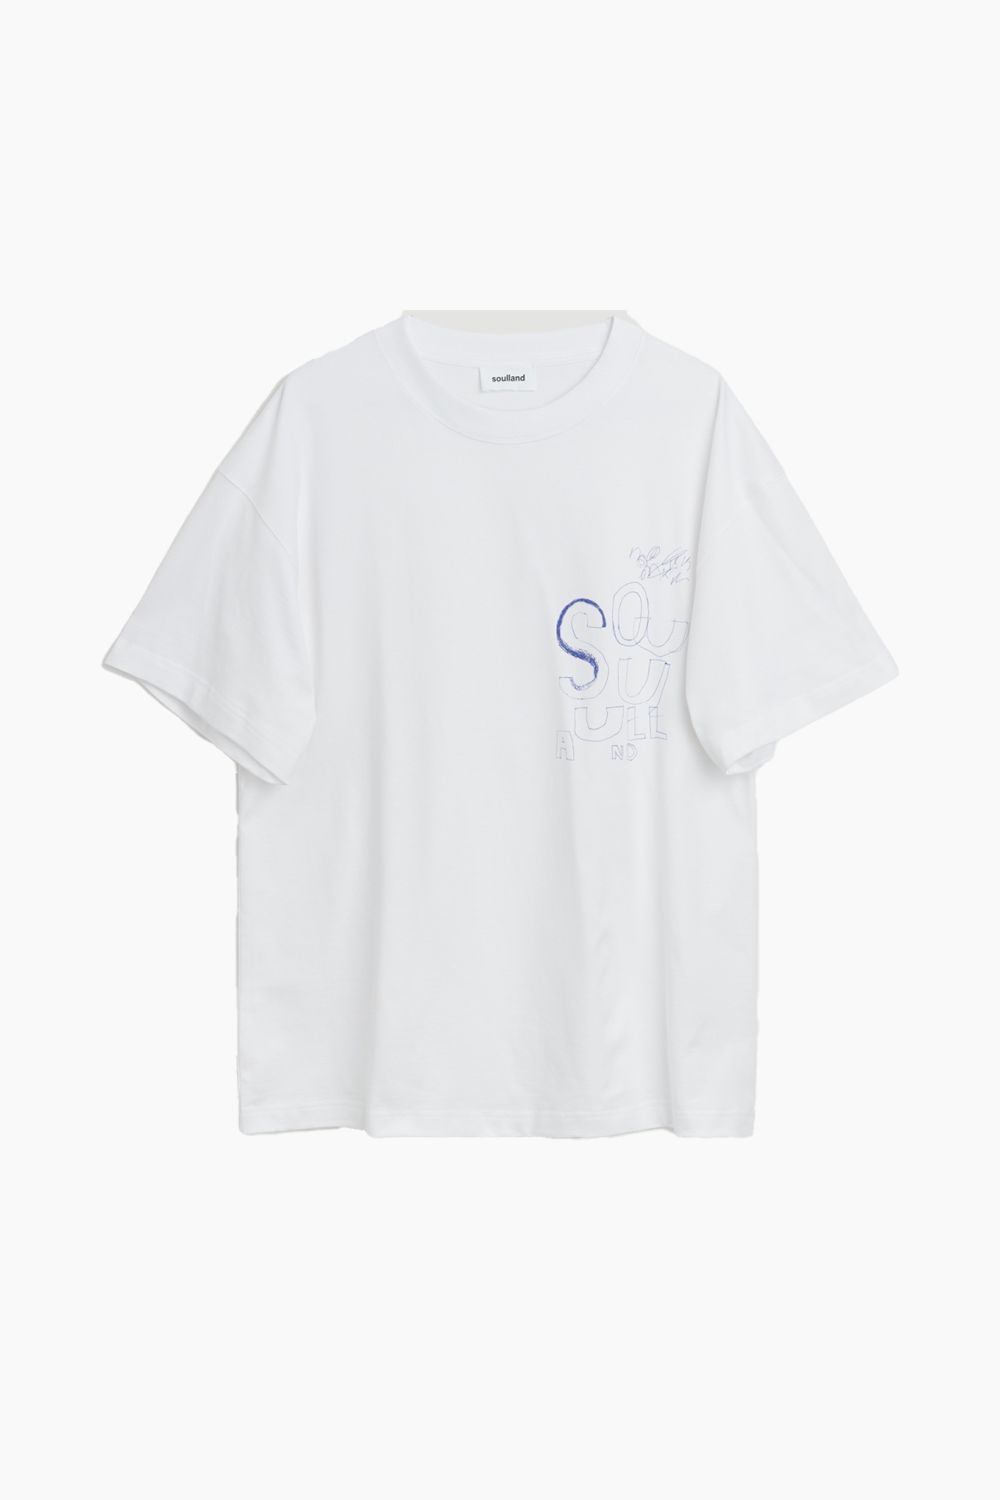 Se Kai T-shirt Hotel - White - Soulland - Hvid XS/S hos QNTS.dk